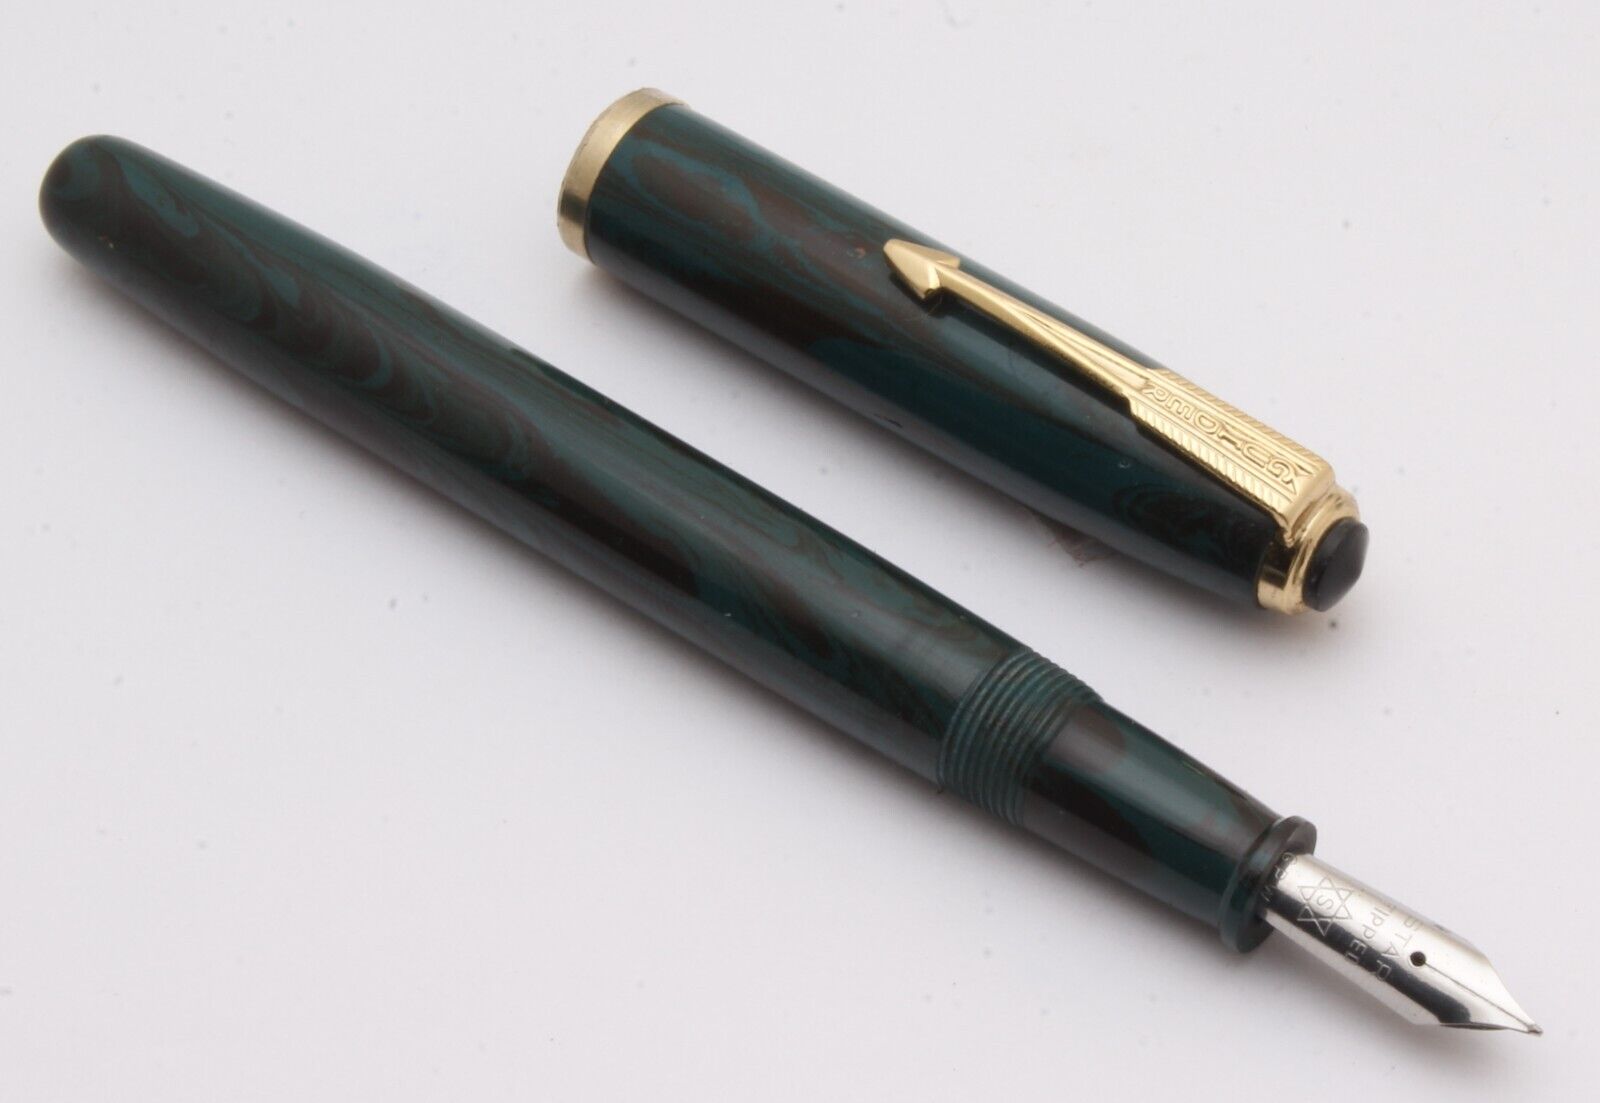 Guider Ebonite Handmade Fountain Pen Teal Blue & Black Vintage New Old Stock